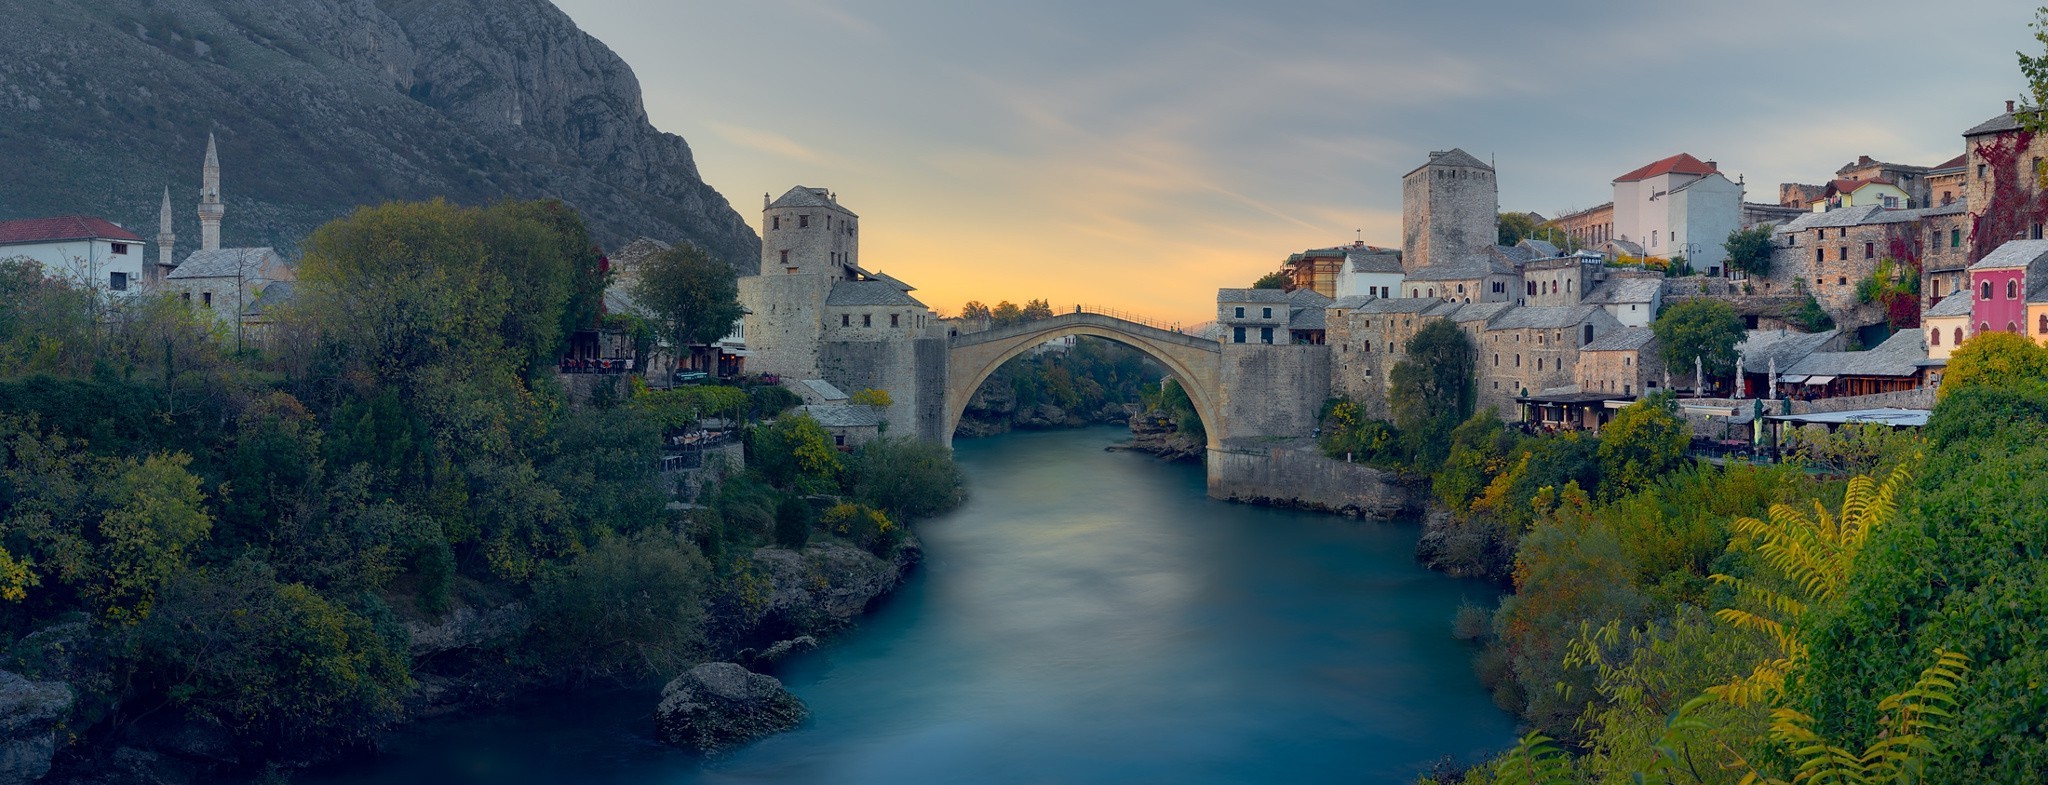 landscape, Nature, River, Old, Bridge, City, Mountain, Trees, Architecture, Bosnia, Mostar Wallpaper